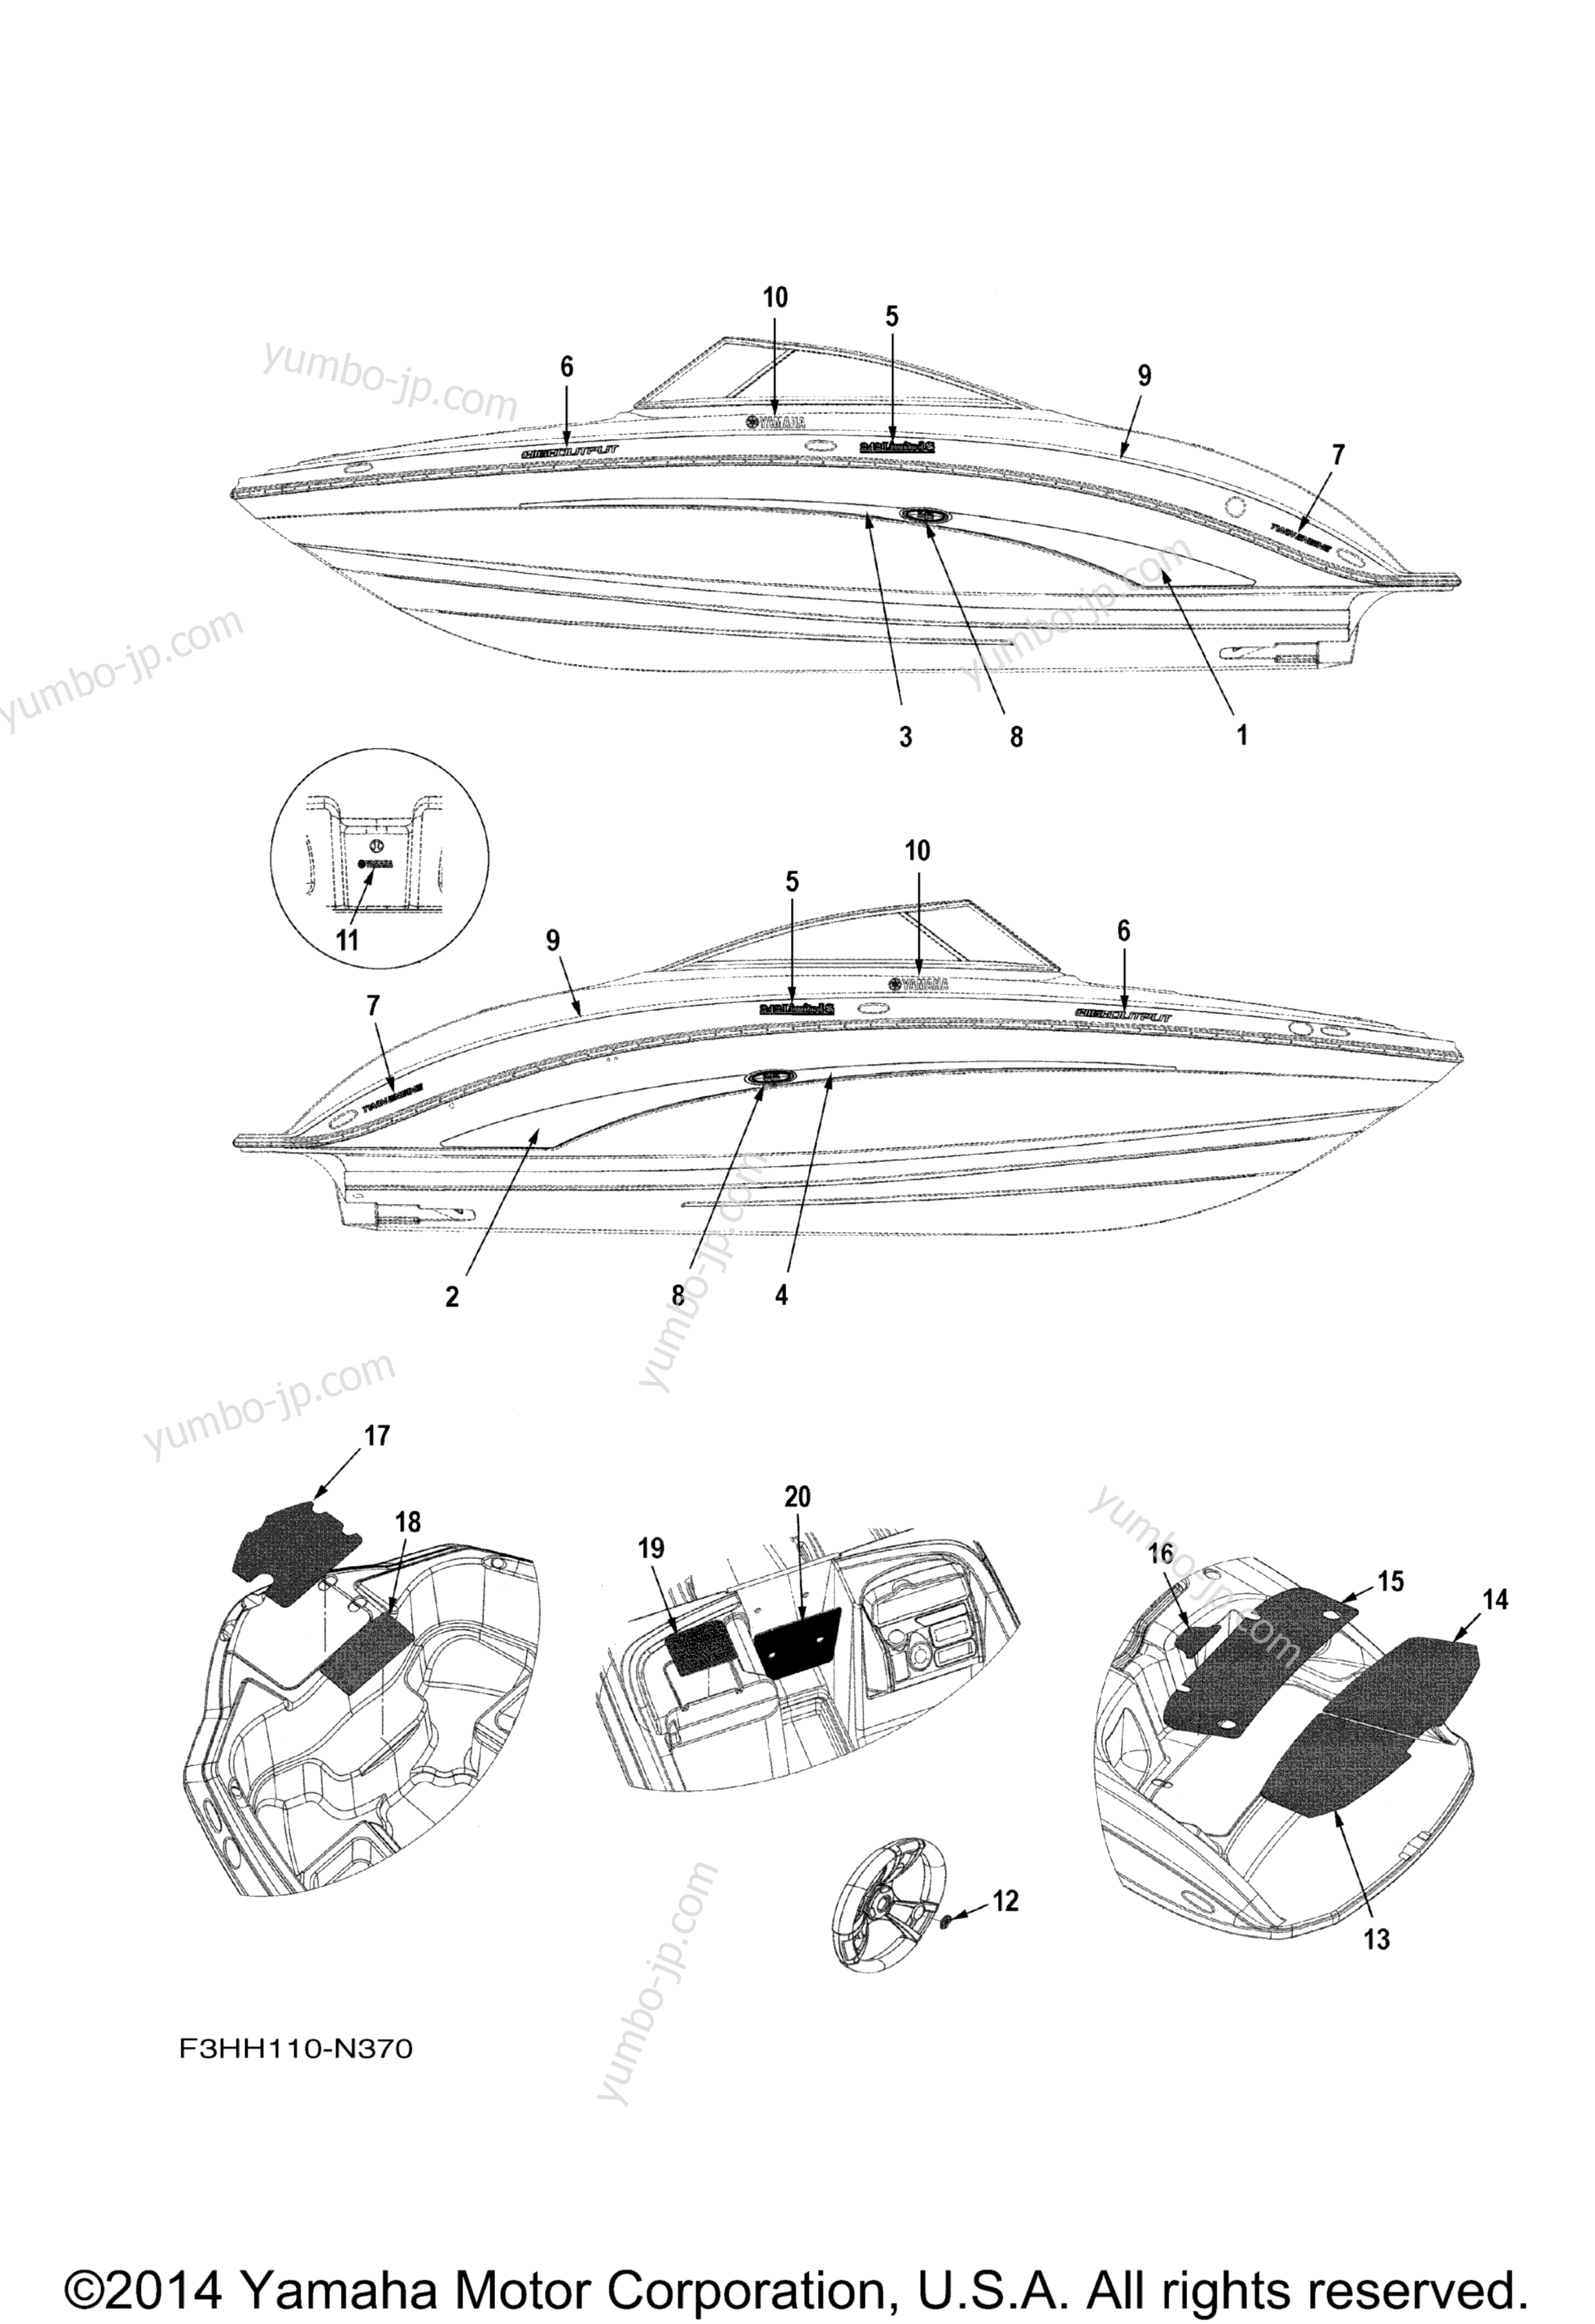 Graphics & Mats for boats YAMAHA 242 LIMITED S CALIFORNIA (SXT1800HLN) CA 2014 year